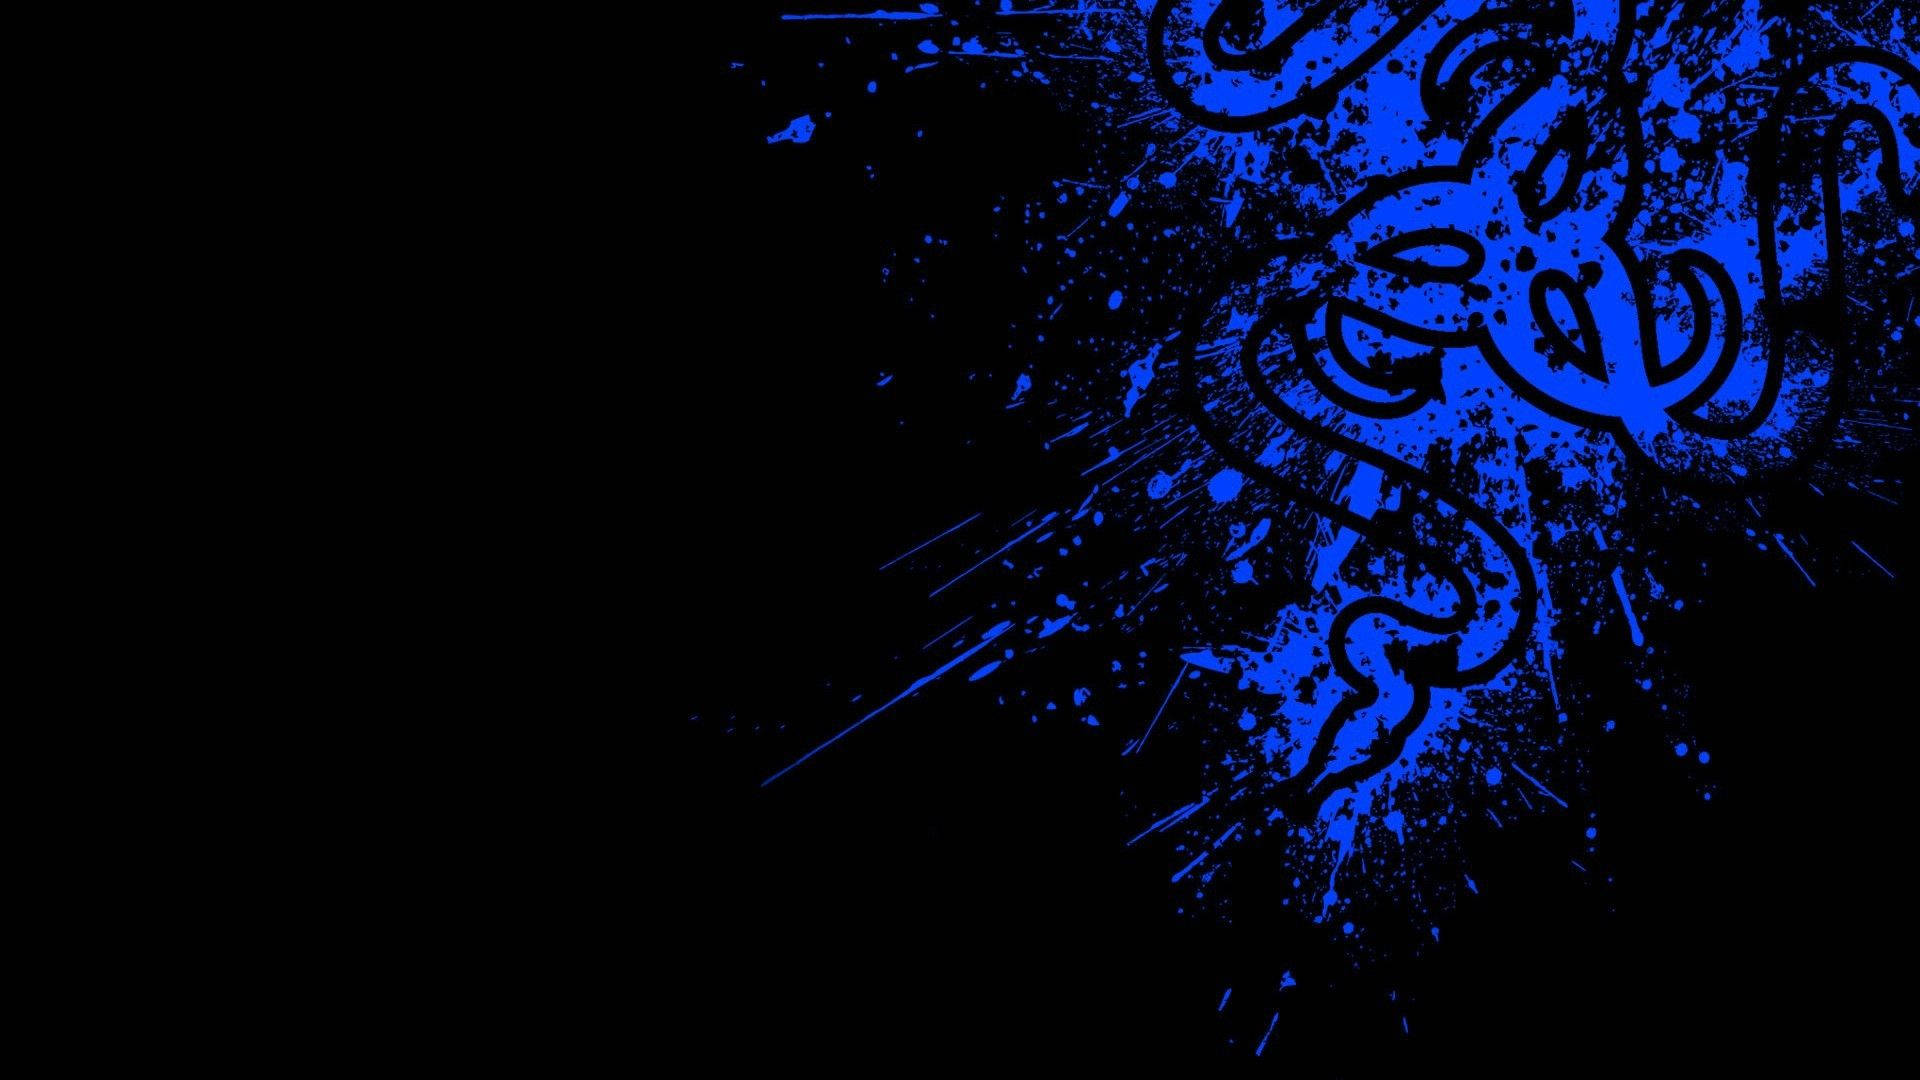 Neon Blue Splashes Razer Wallpaper